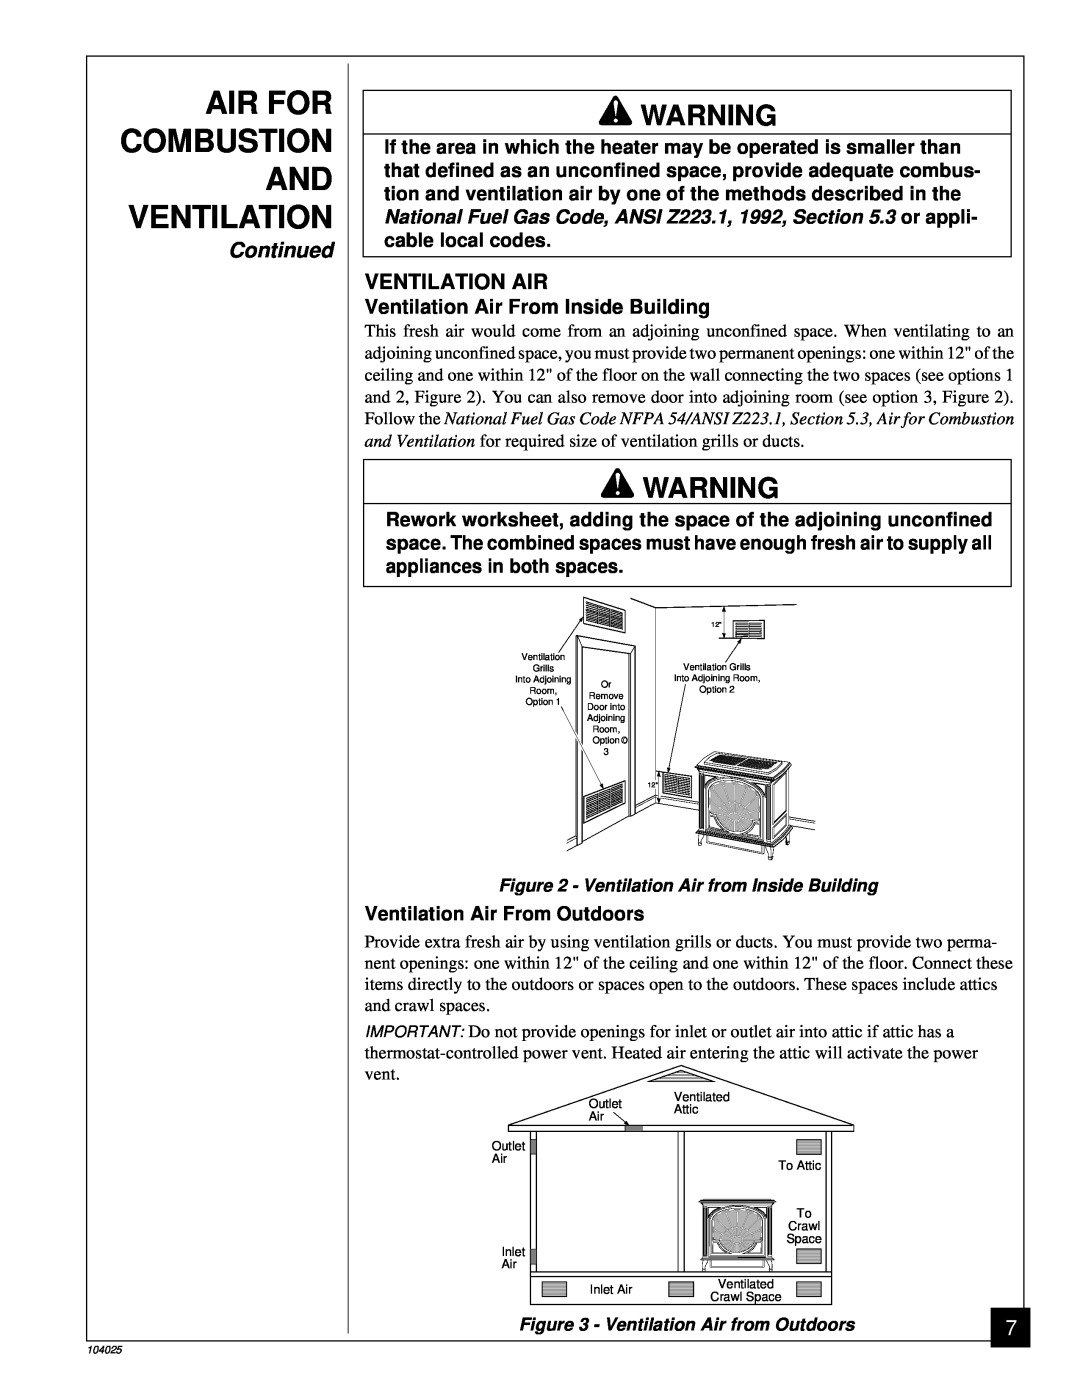 Desa SCIVFC, SCIVFB, SCIVFR, SCIVFG installation manual Combustion, Air For, Continued, Ventilation Air 